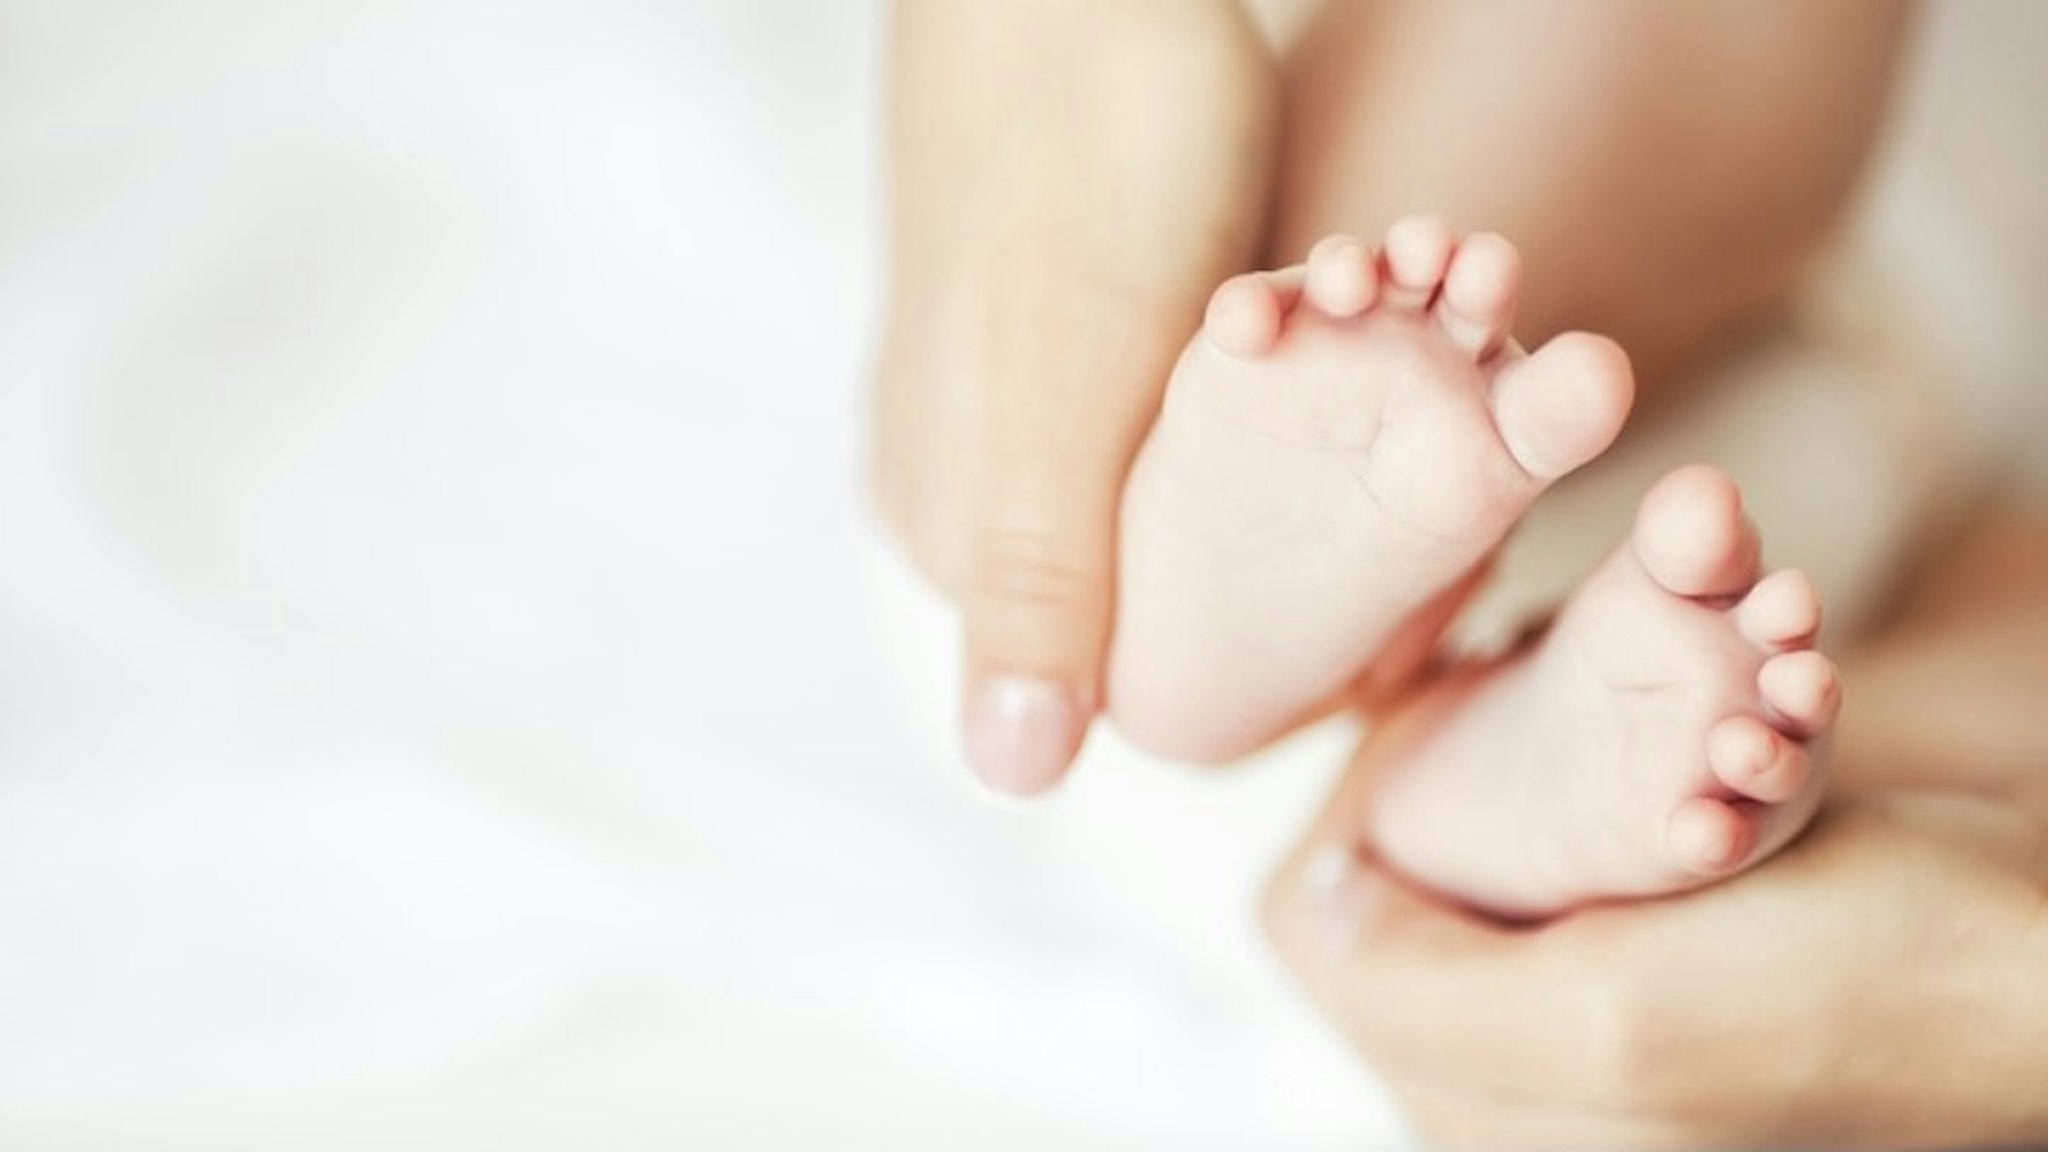 Happy Feet - stock photo Parent holding the feet of a newborn baby. PhotoBeaM via Getty Images